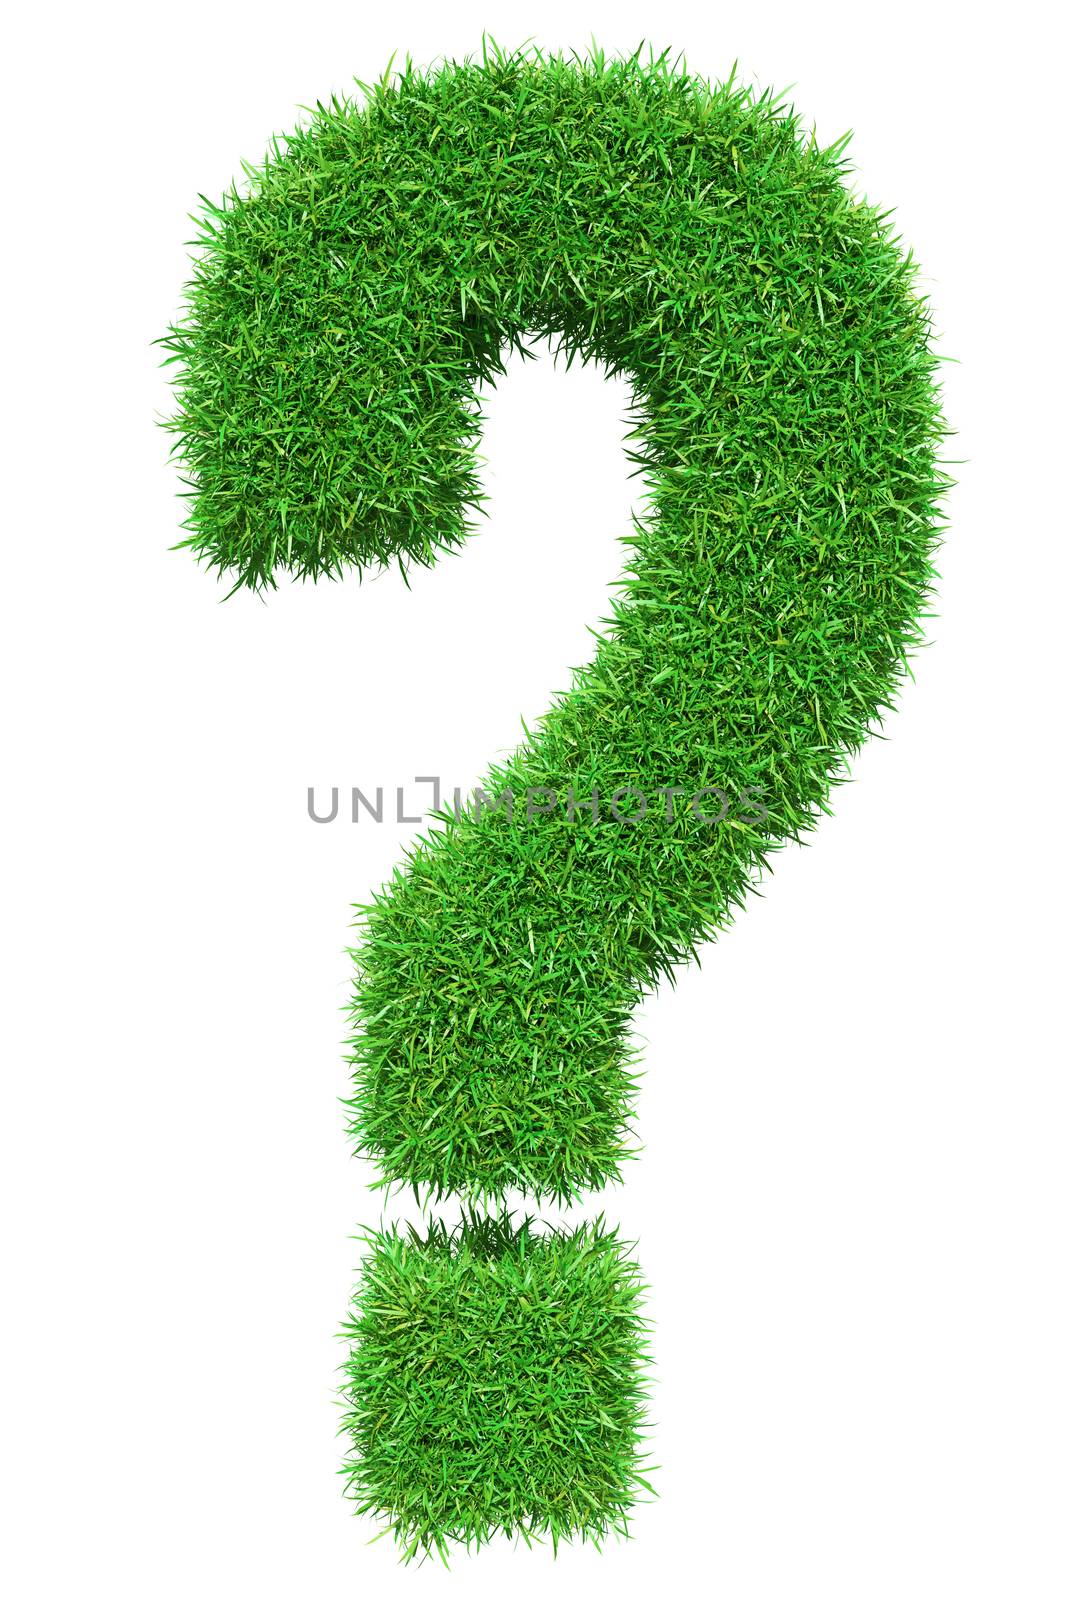 Green grass question mark by cherezoff